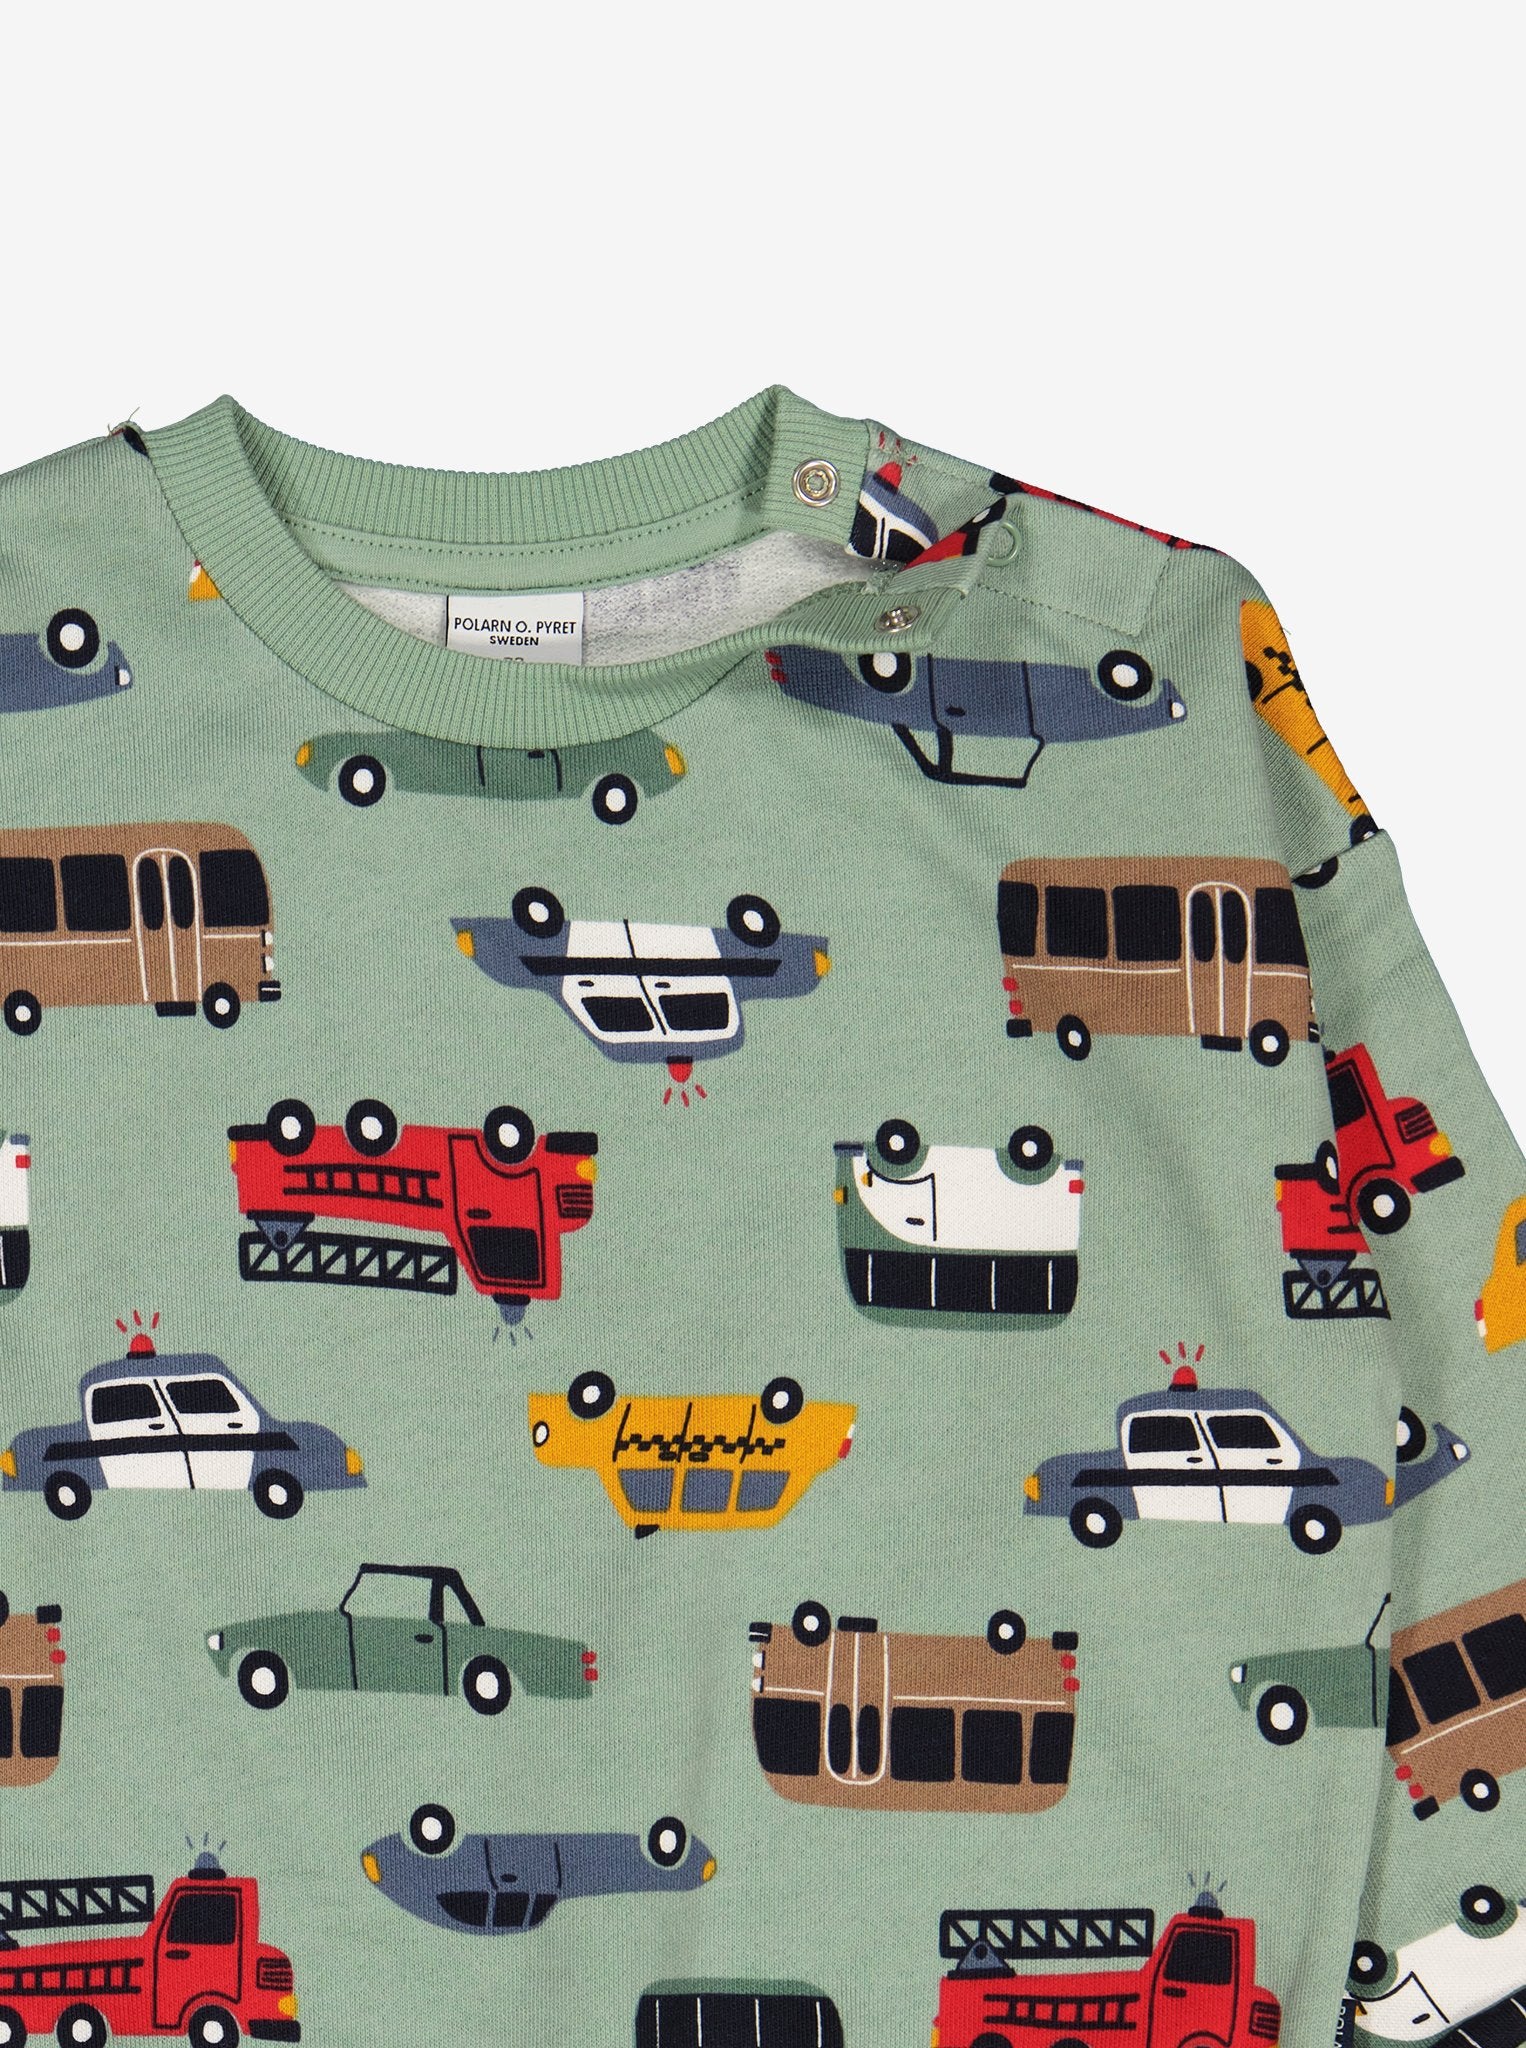  Organic Green Car Kids Sweatshirt from Polarn O. Pyret Kidswear. Made with 100% organic cotton.